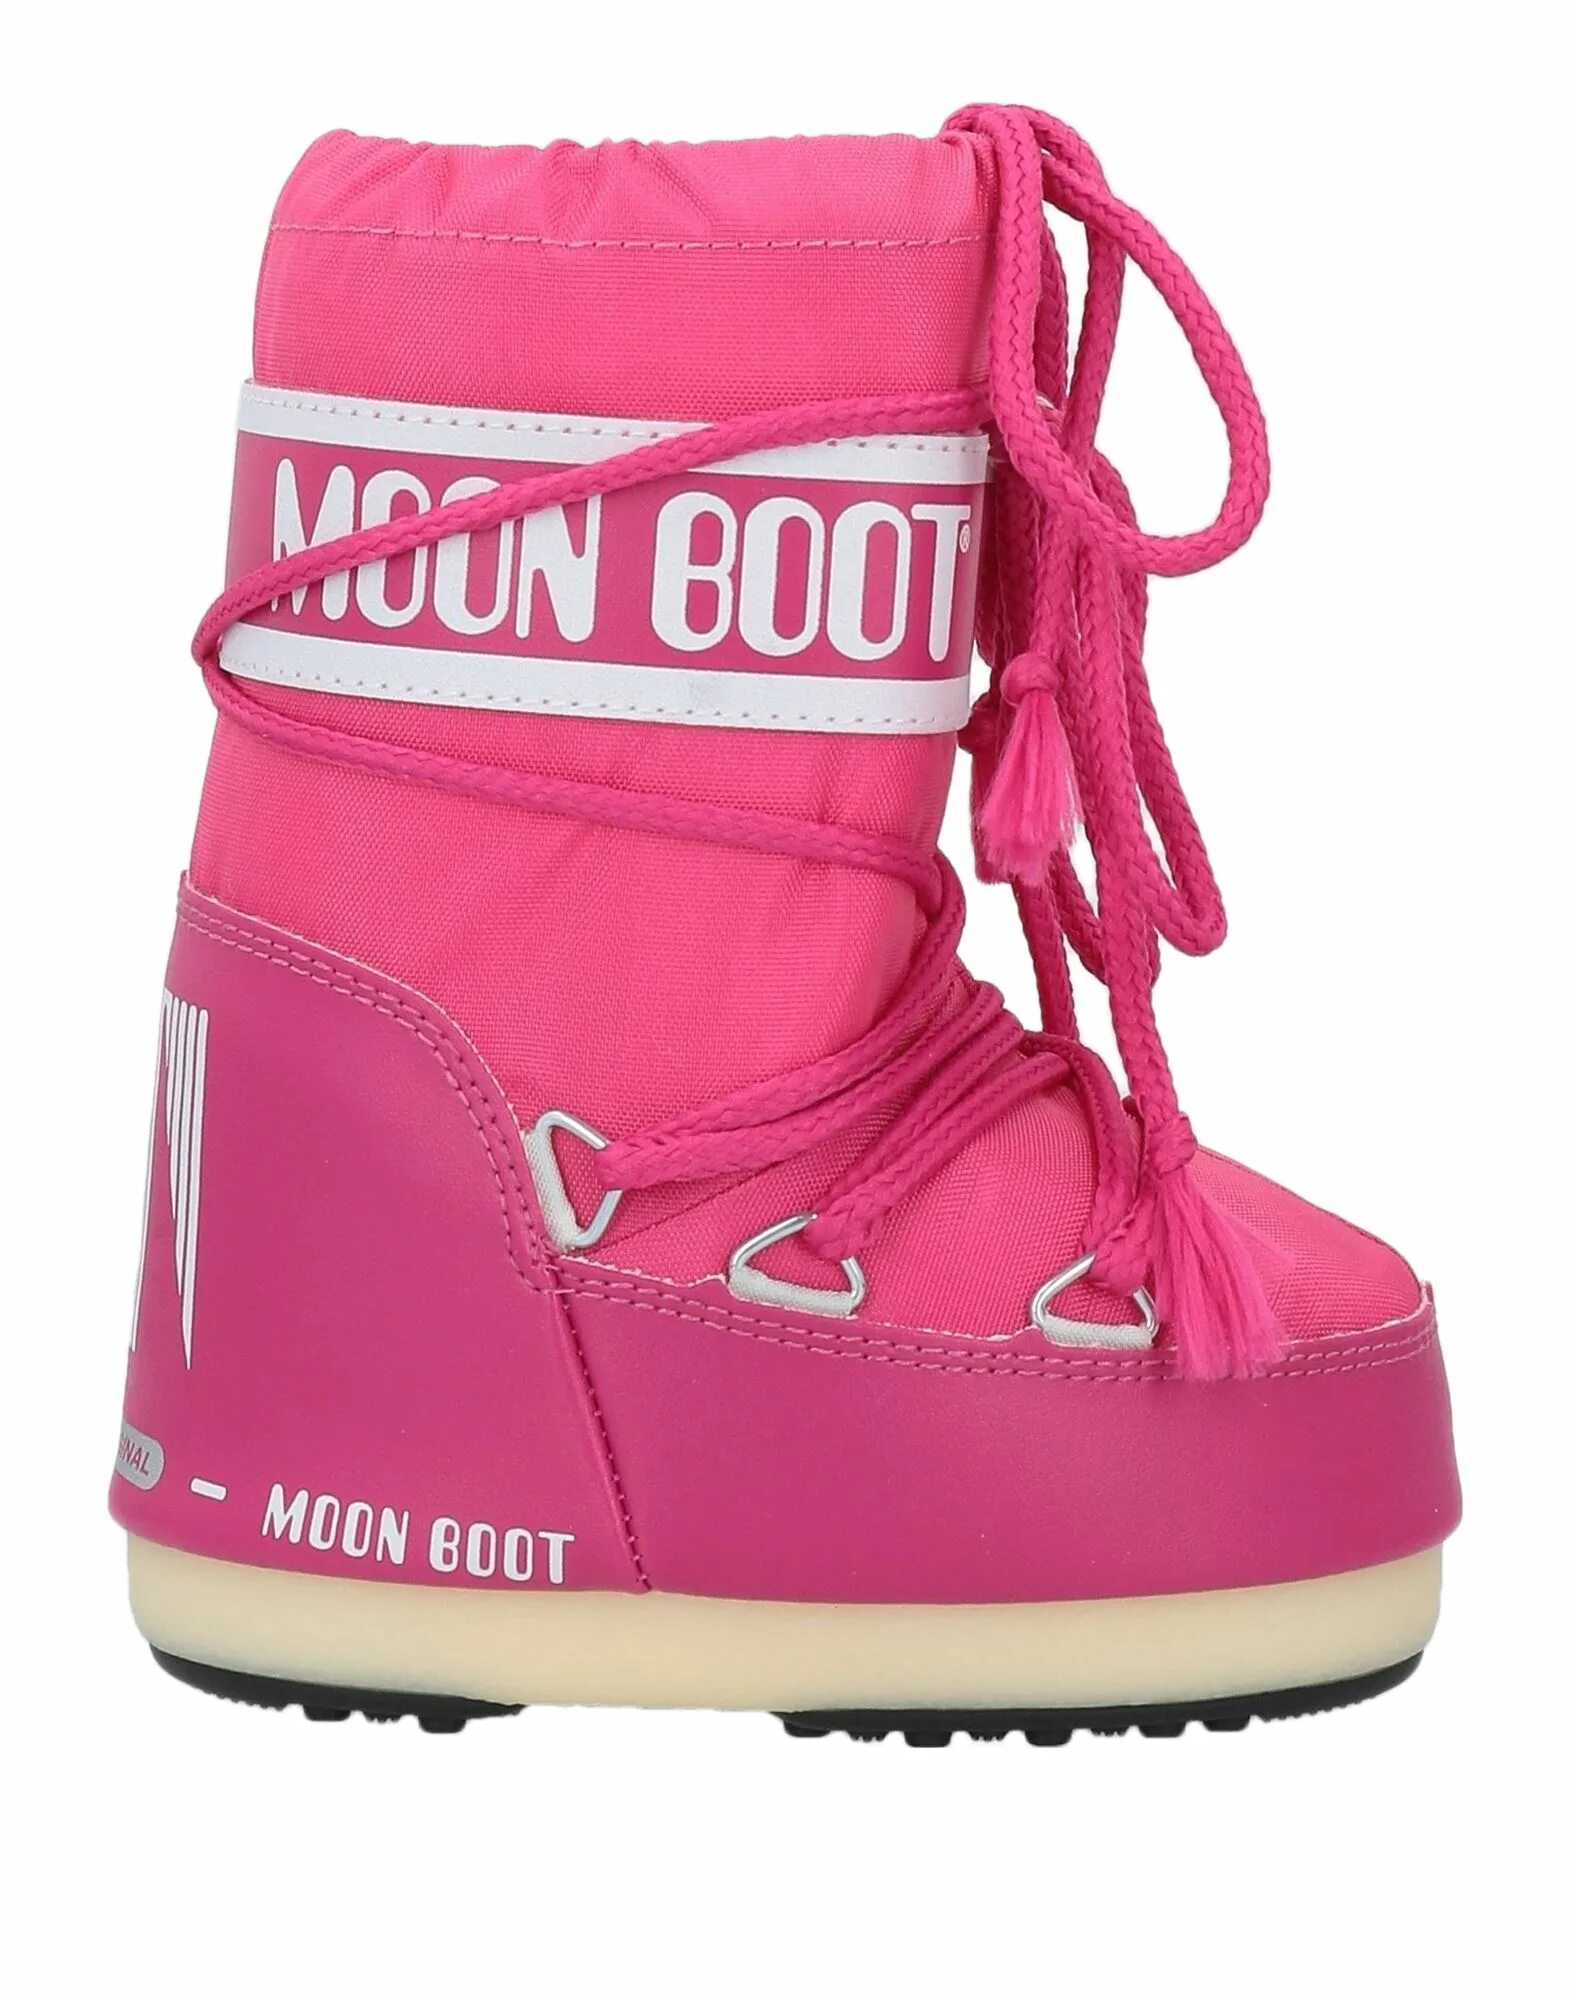 Обувь муна. Moon Boot. Ботинки Moon. Муны ботики. Лунные ботинки.